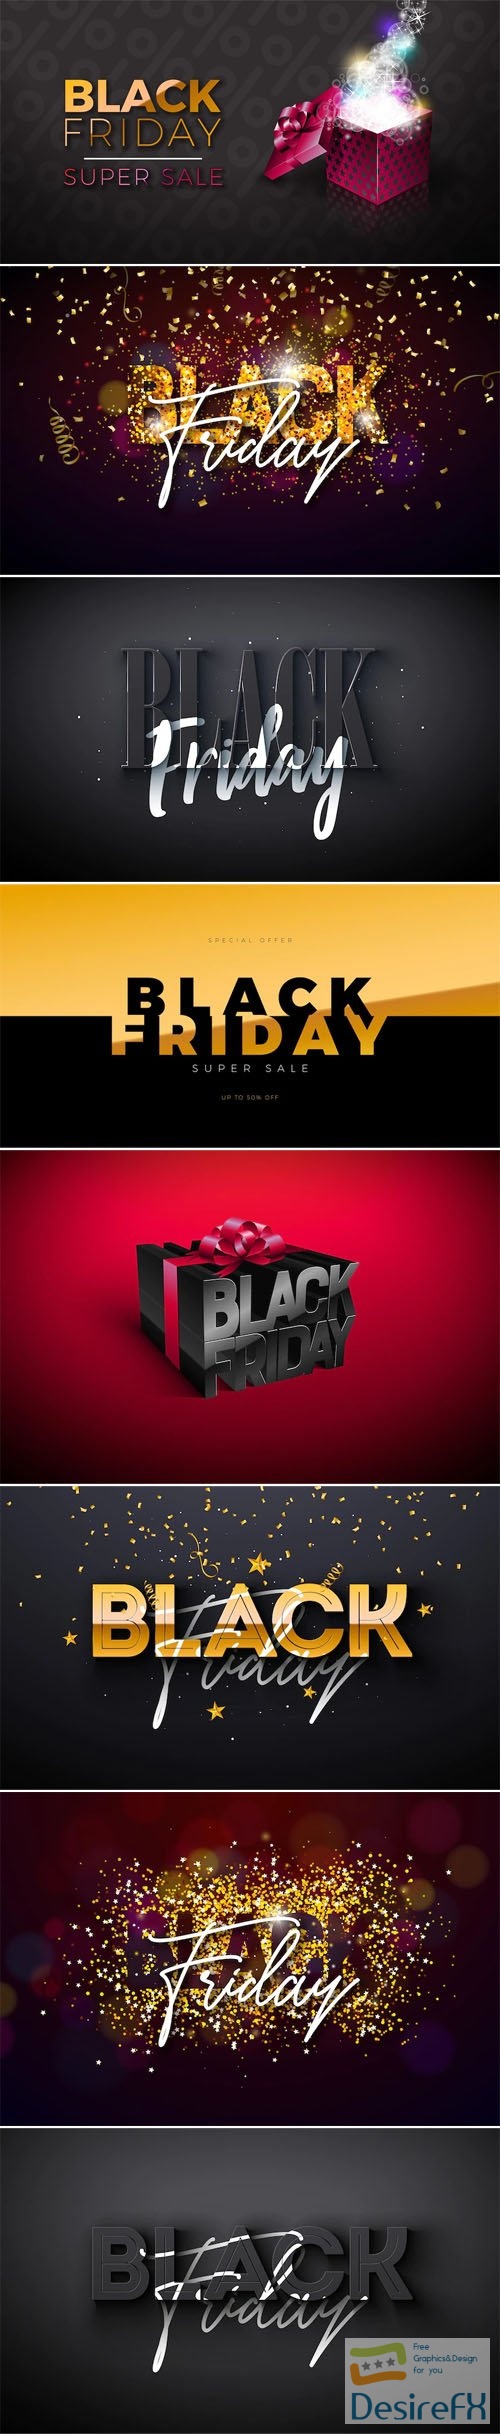 Black Friday Sales - 3D Lettering Vector Templates Vol.1